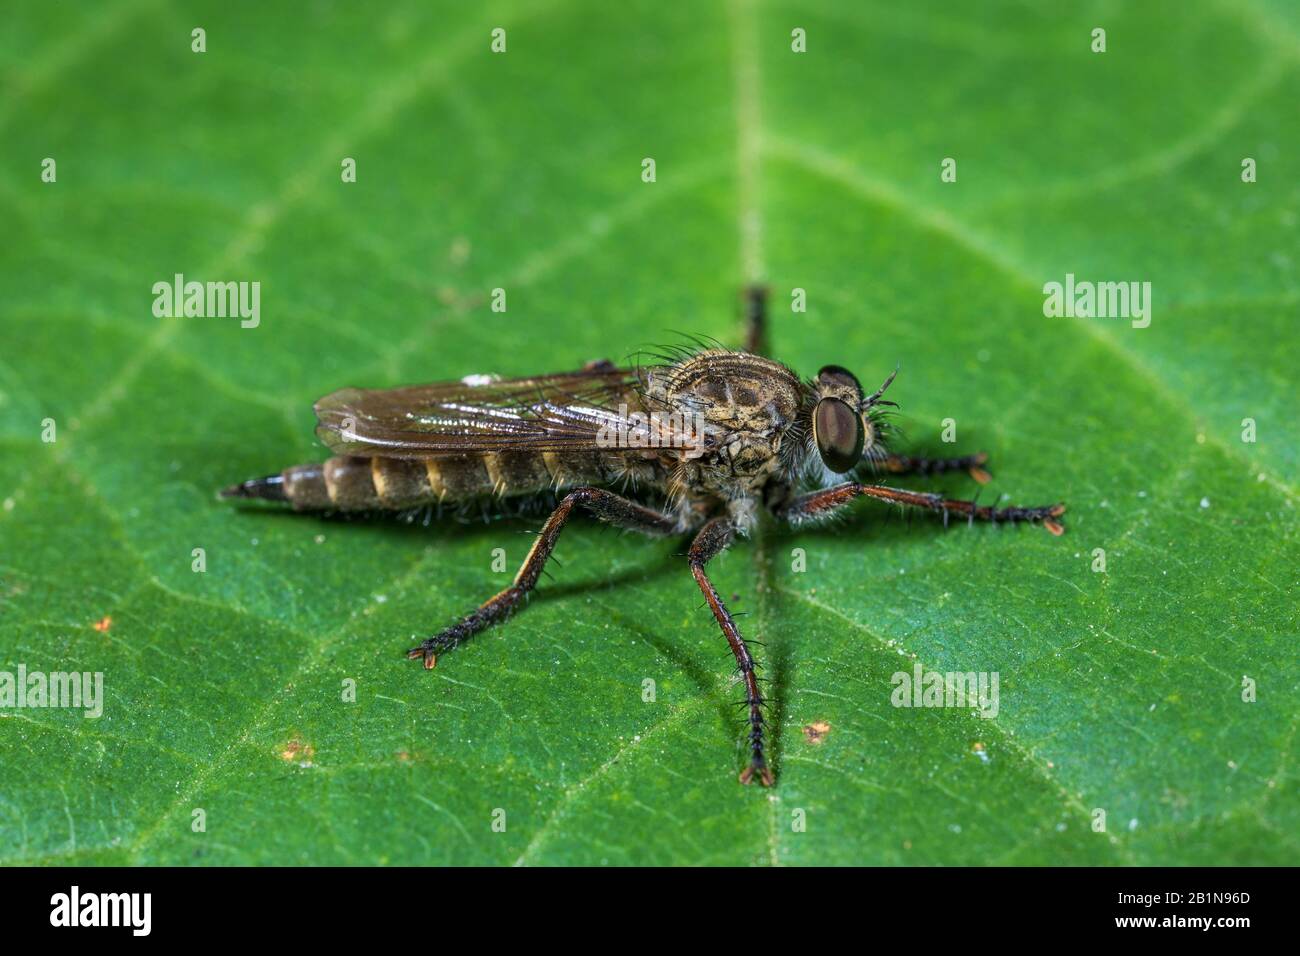 common awl robberfly (Neoitamus cyanurus), on a leaf, Germany Stock Photo